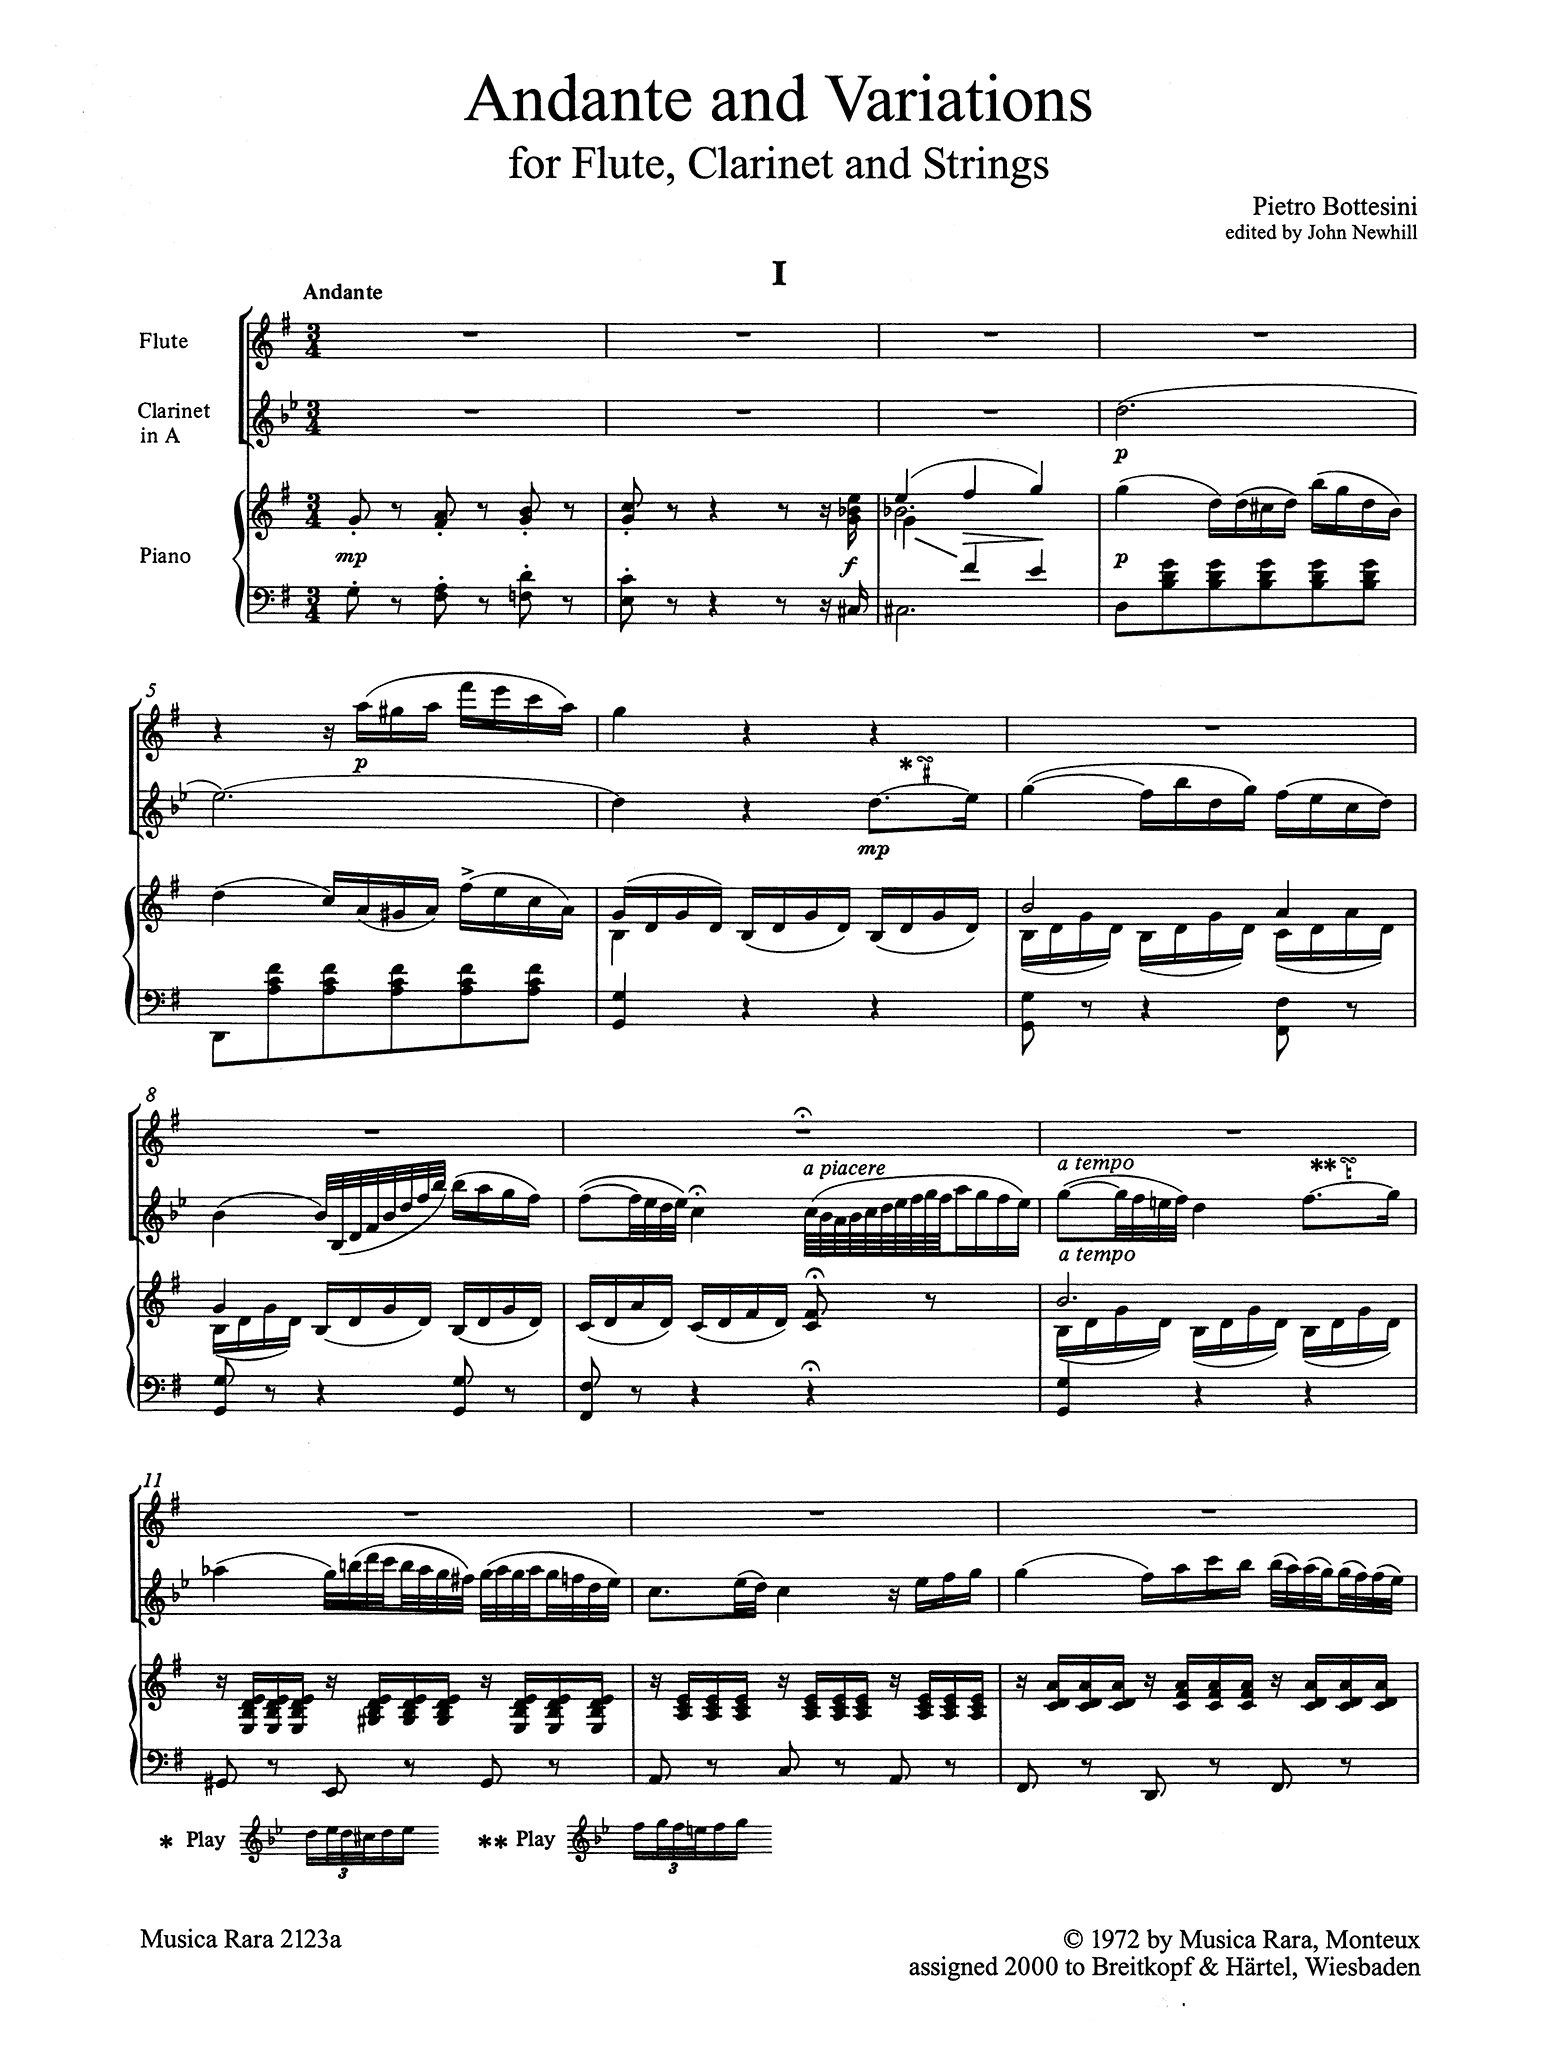 Pietro Bottesini Andante Variations flute clarinet strings piano reduction score page 2